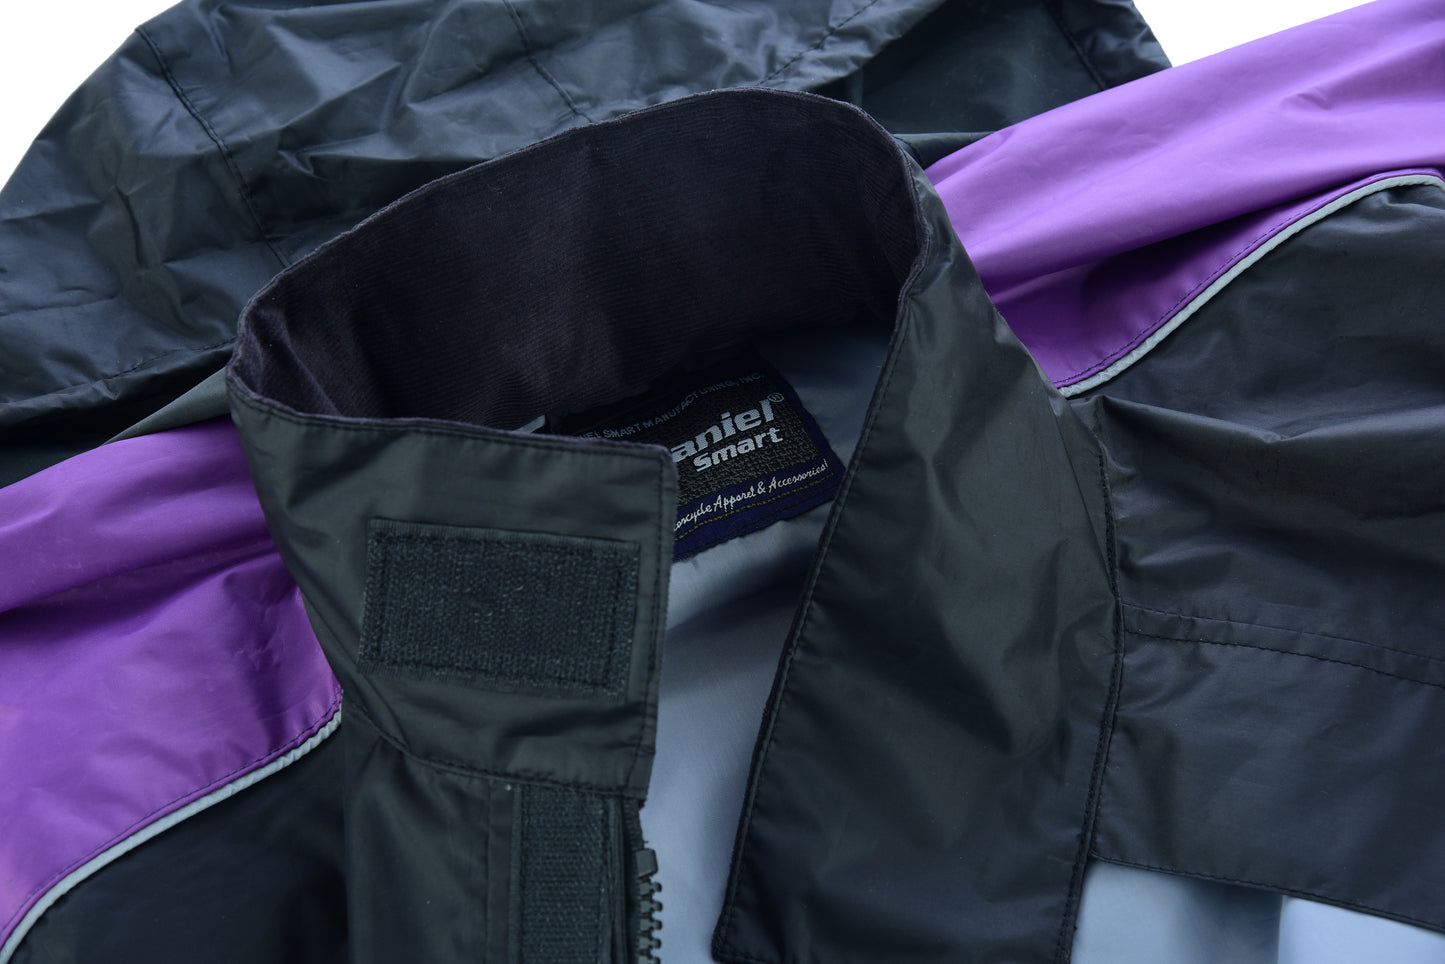 Women's Rain Suit (Purple)